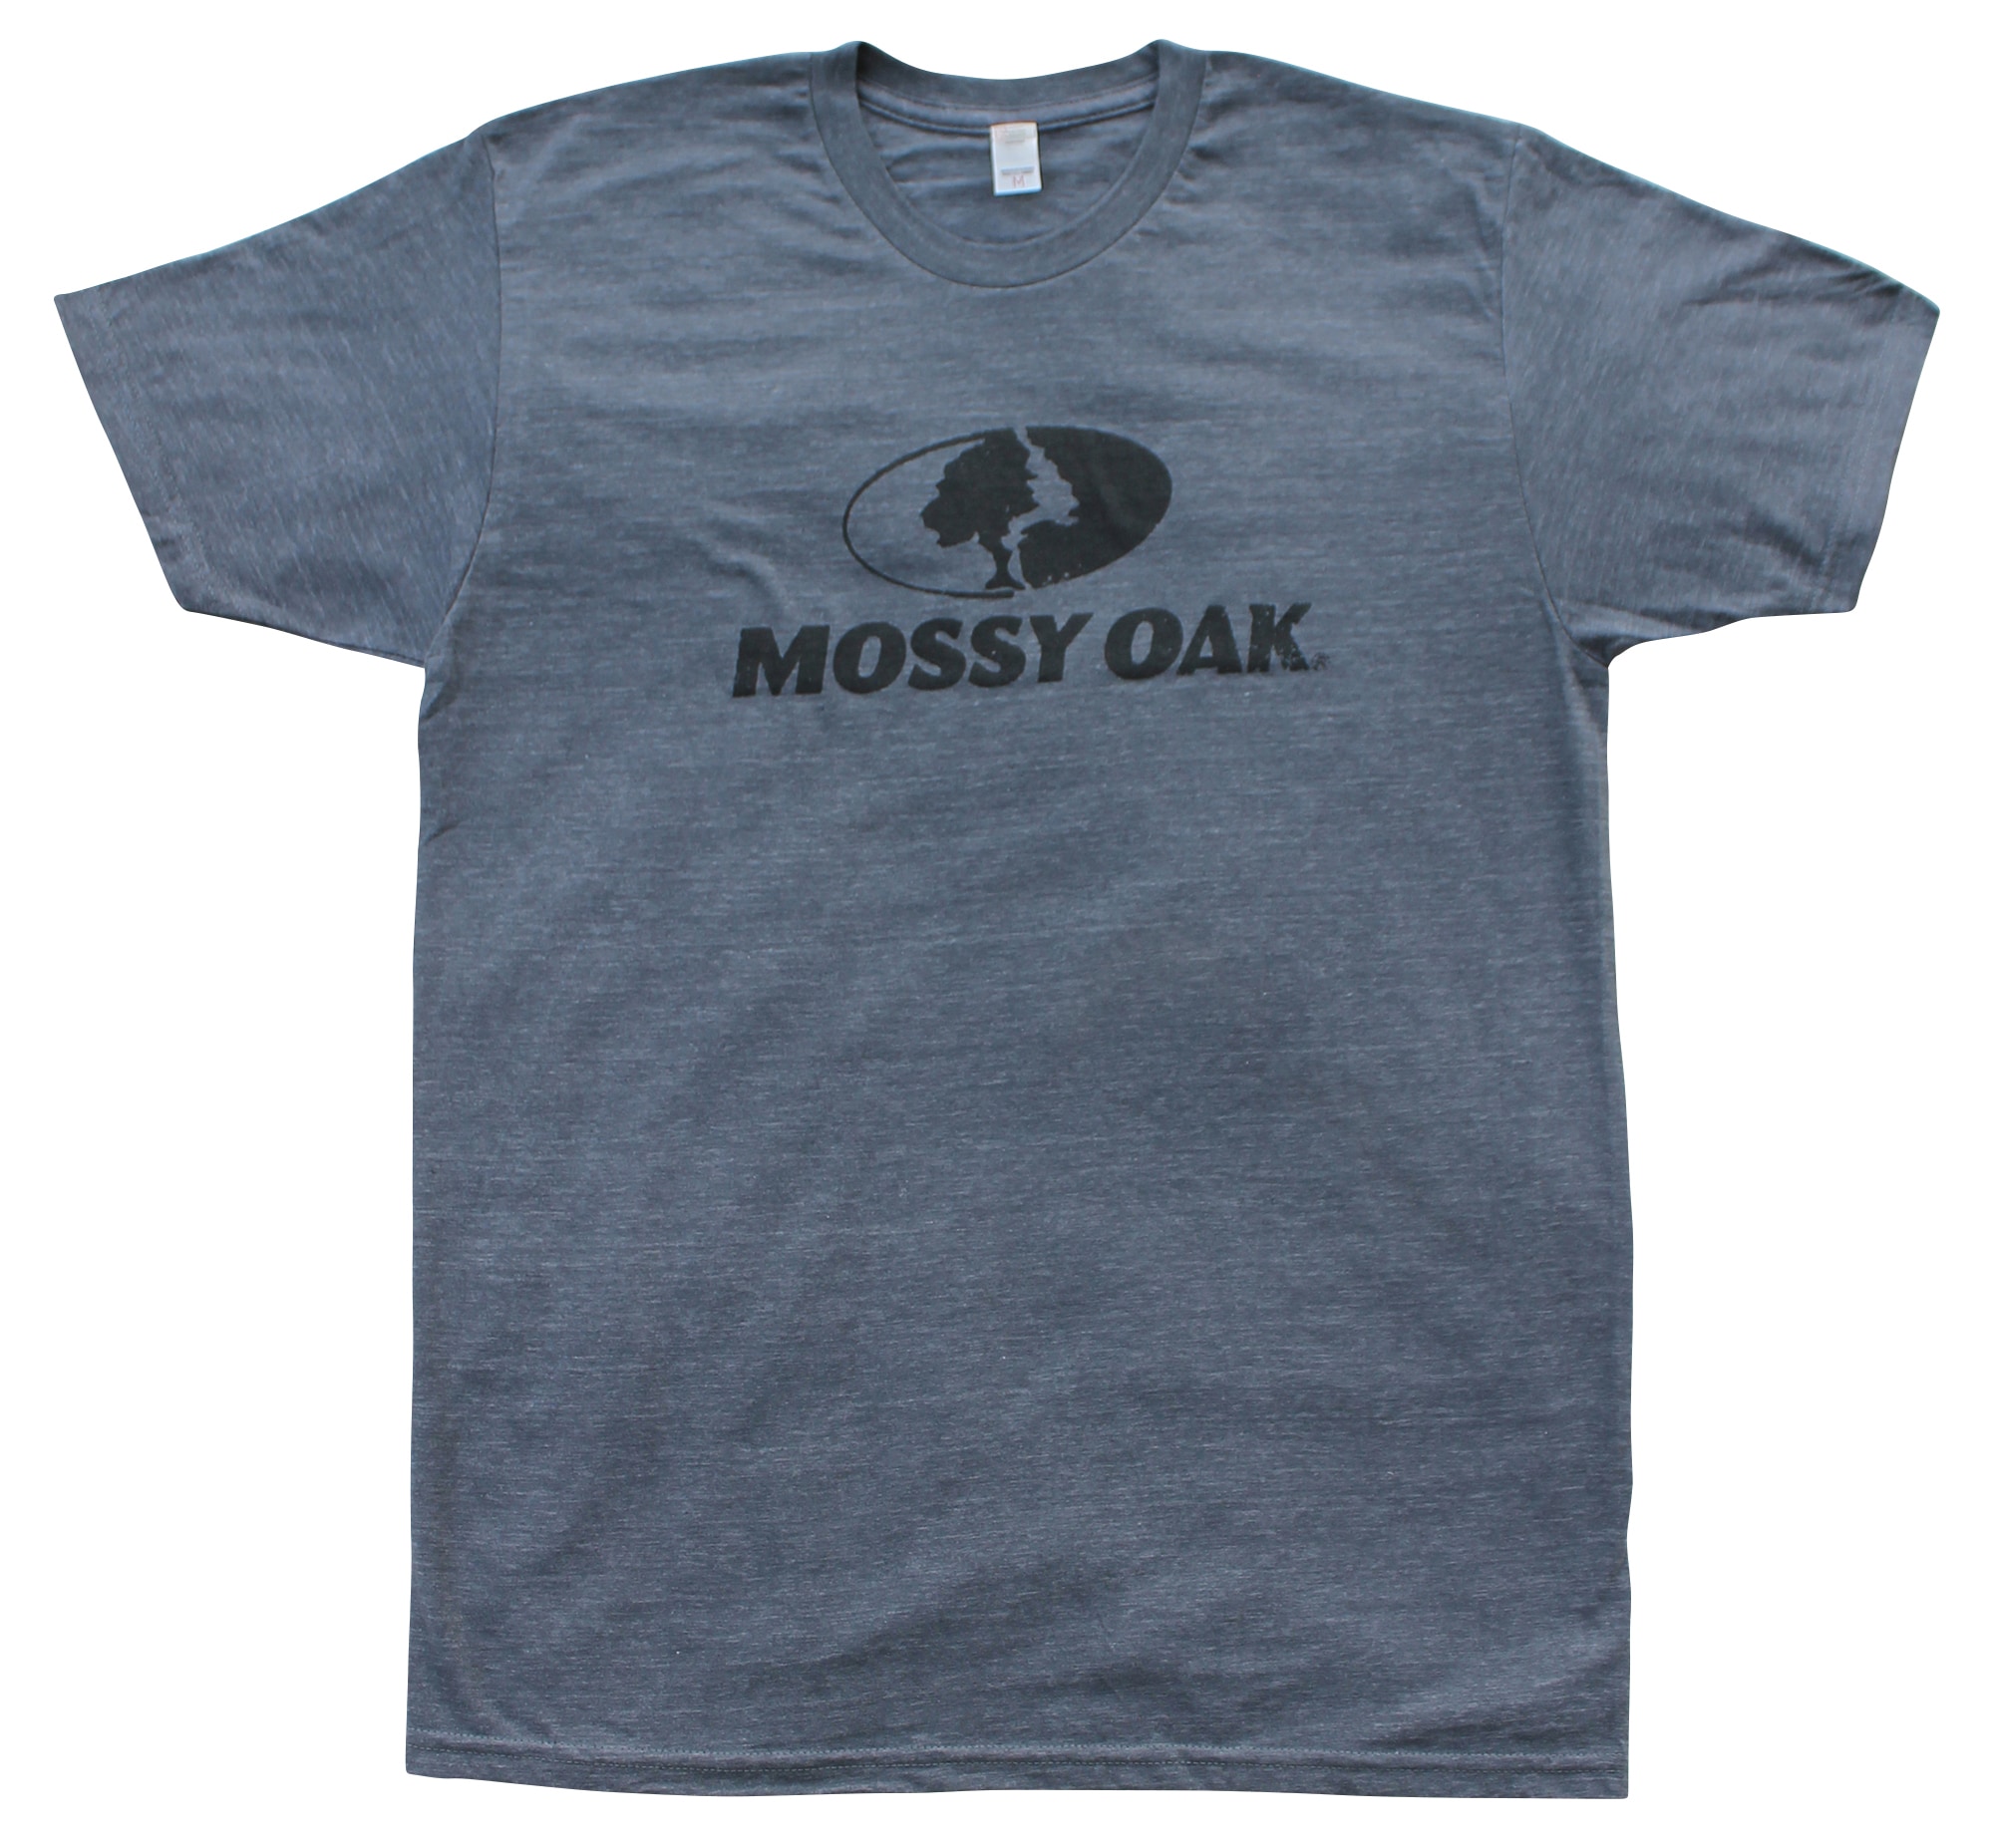 Mossy Oak Clothing at